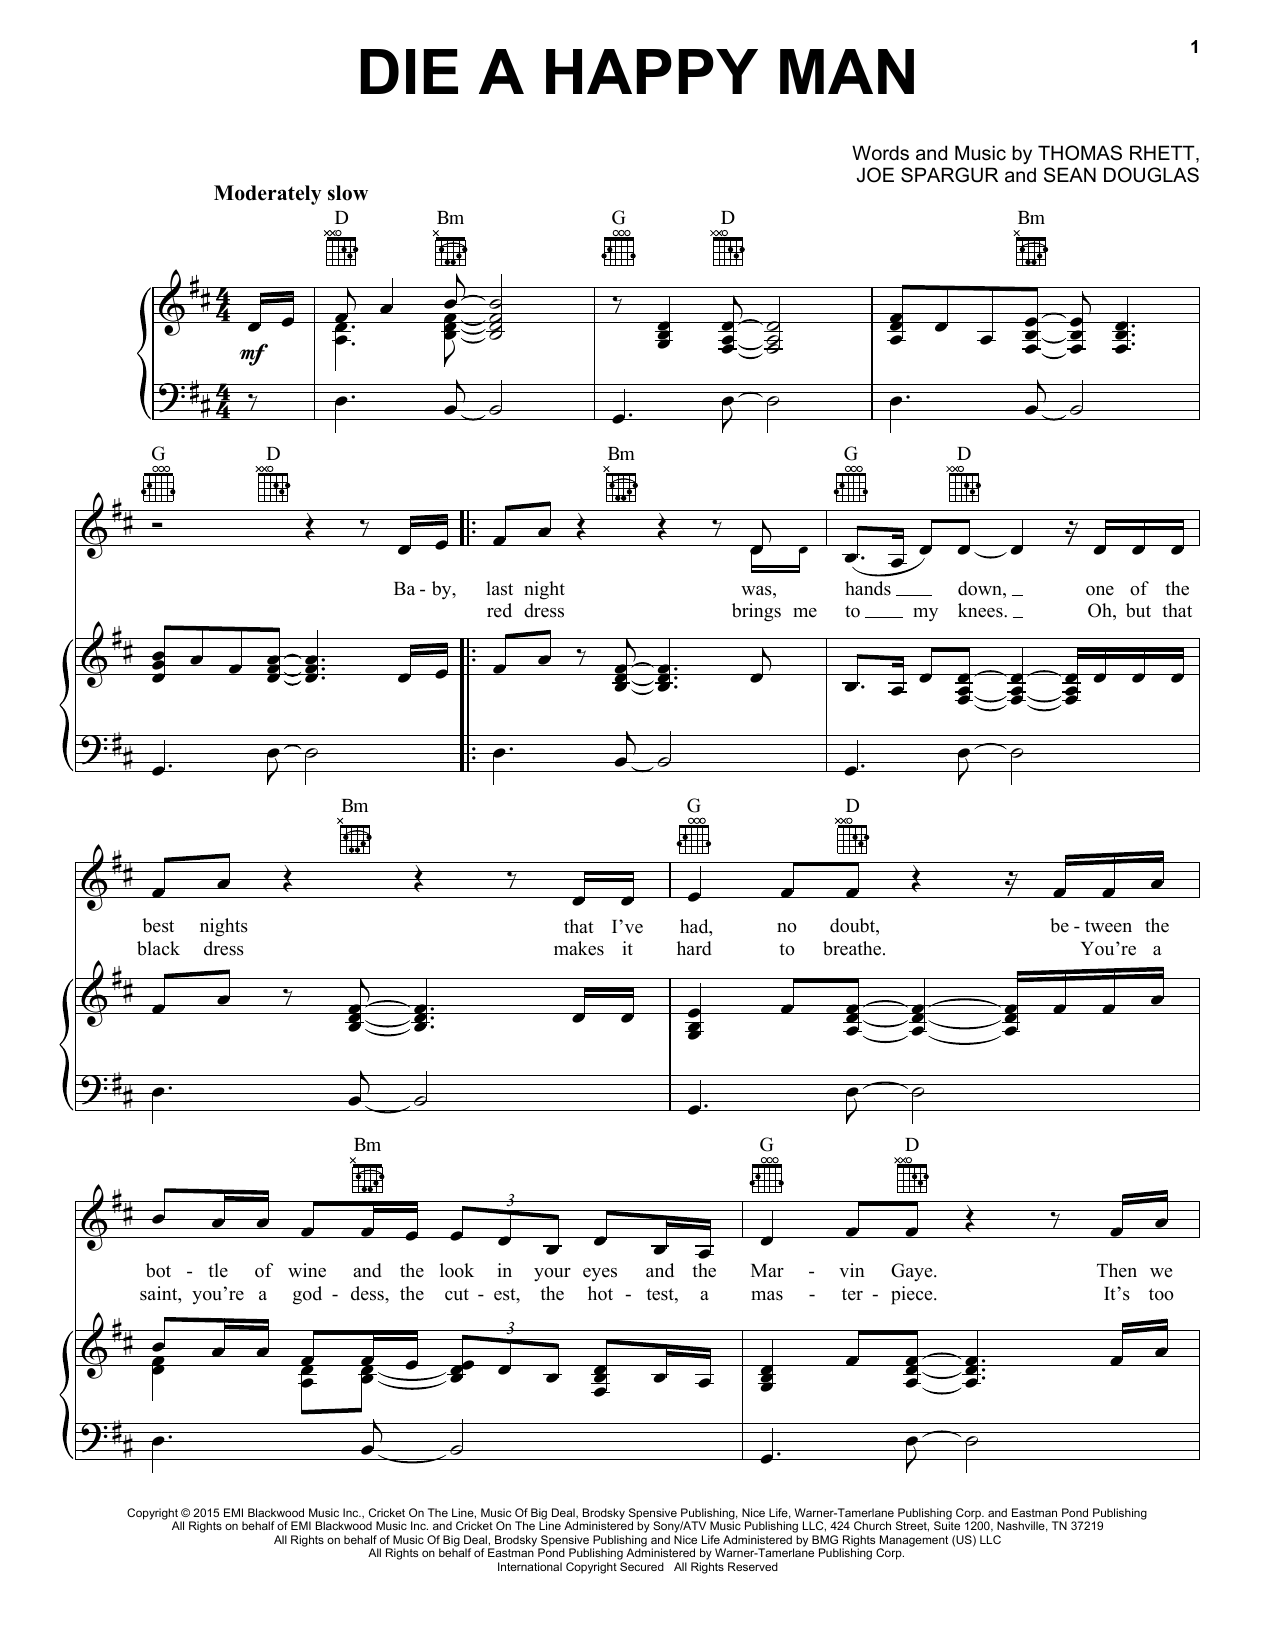 Thomas Rhett Die A Happy Man Sheet Music Notes & Chords for Lyrics & Chords - Download or Print PDF